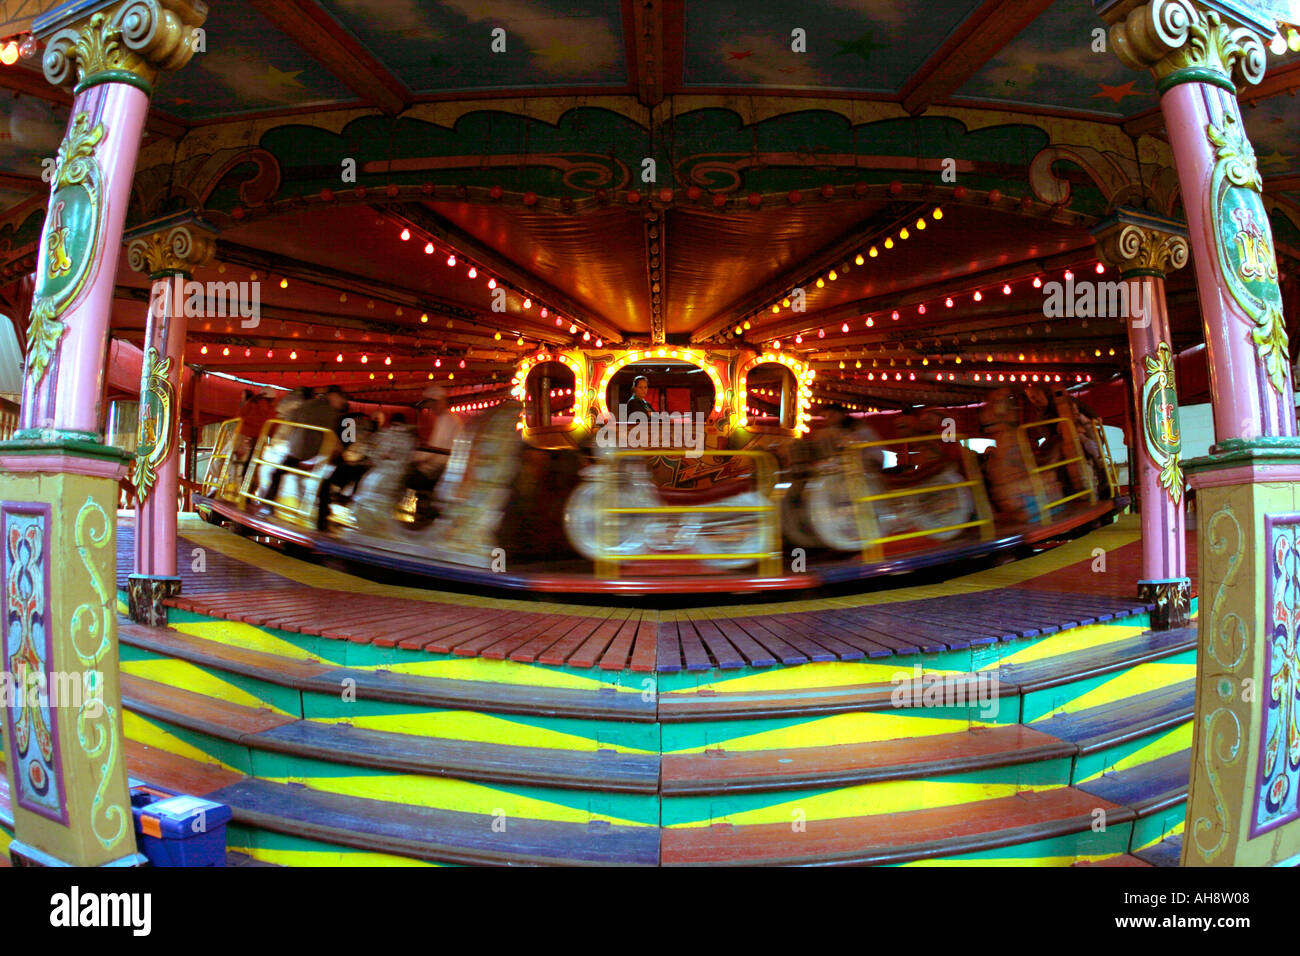 Fairground ride fun funfair movement blur blurred blurring motion speed Stock Photo